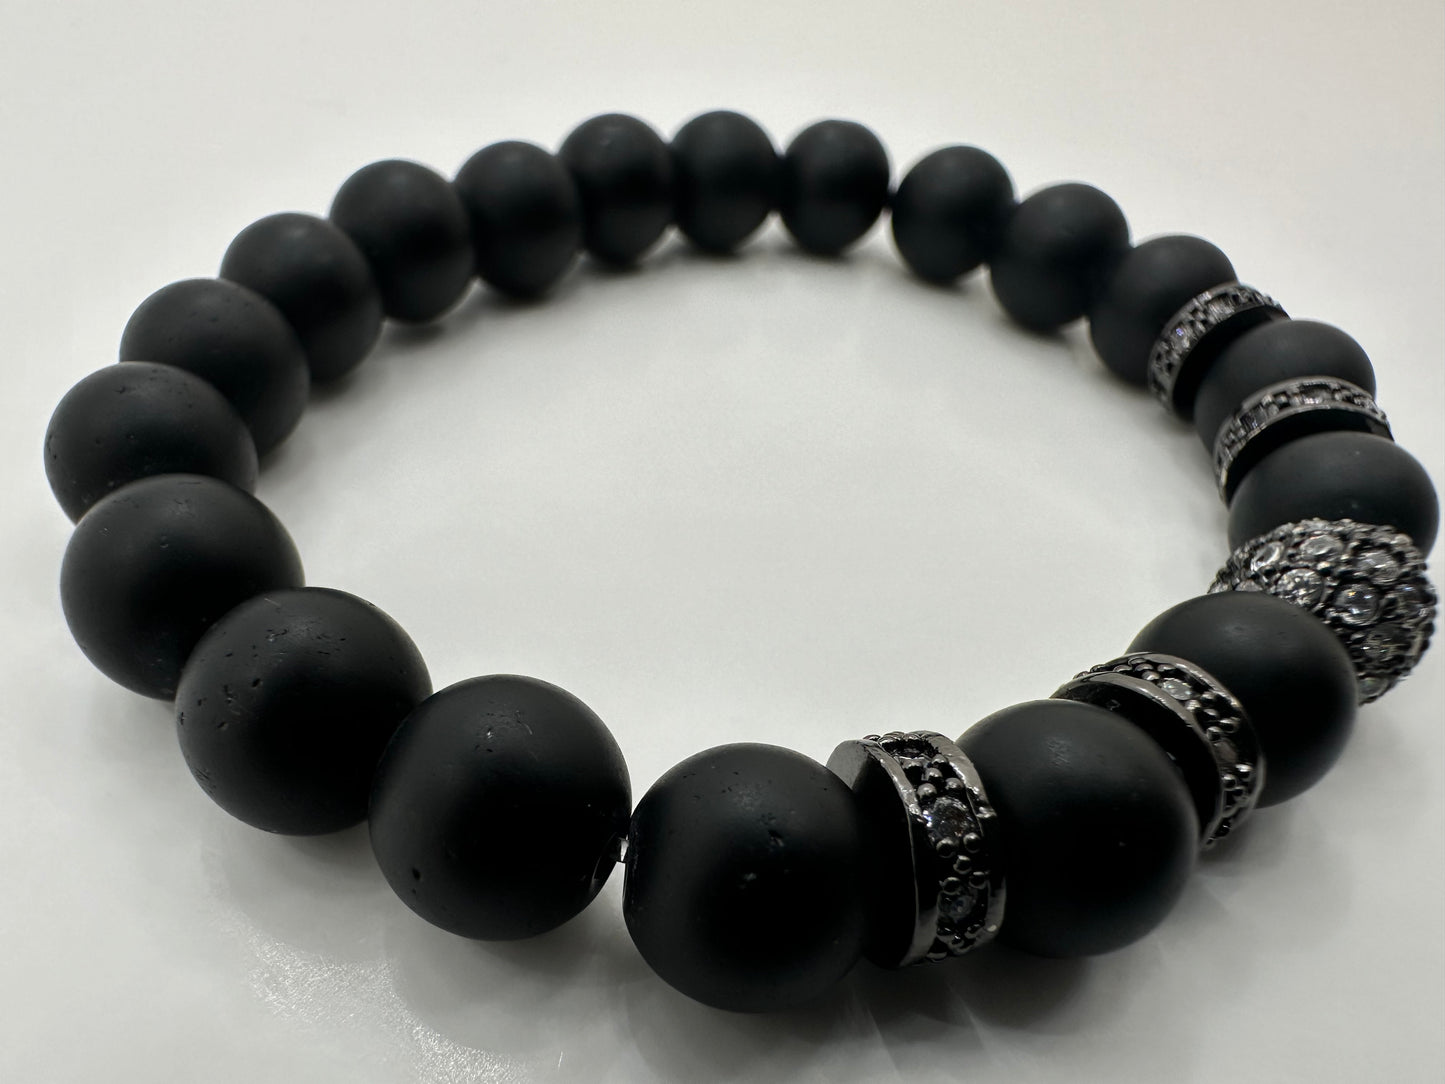 Matte Black Onyx and Pave Rhinestone Accents Gemstone Bracelet Size 6.5 inch